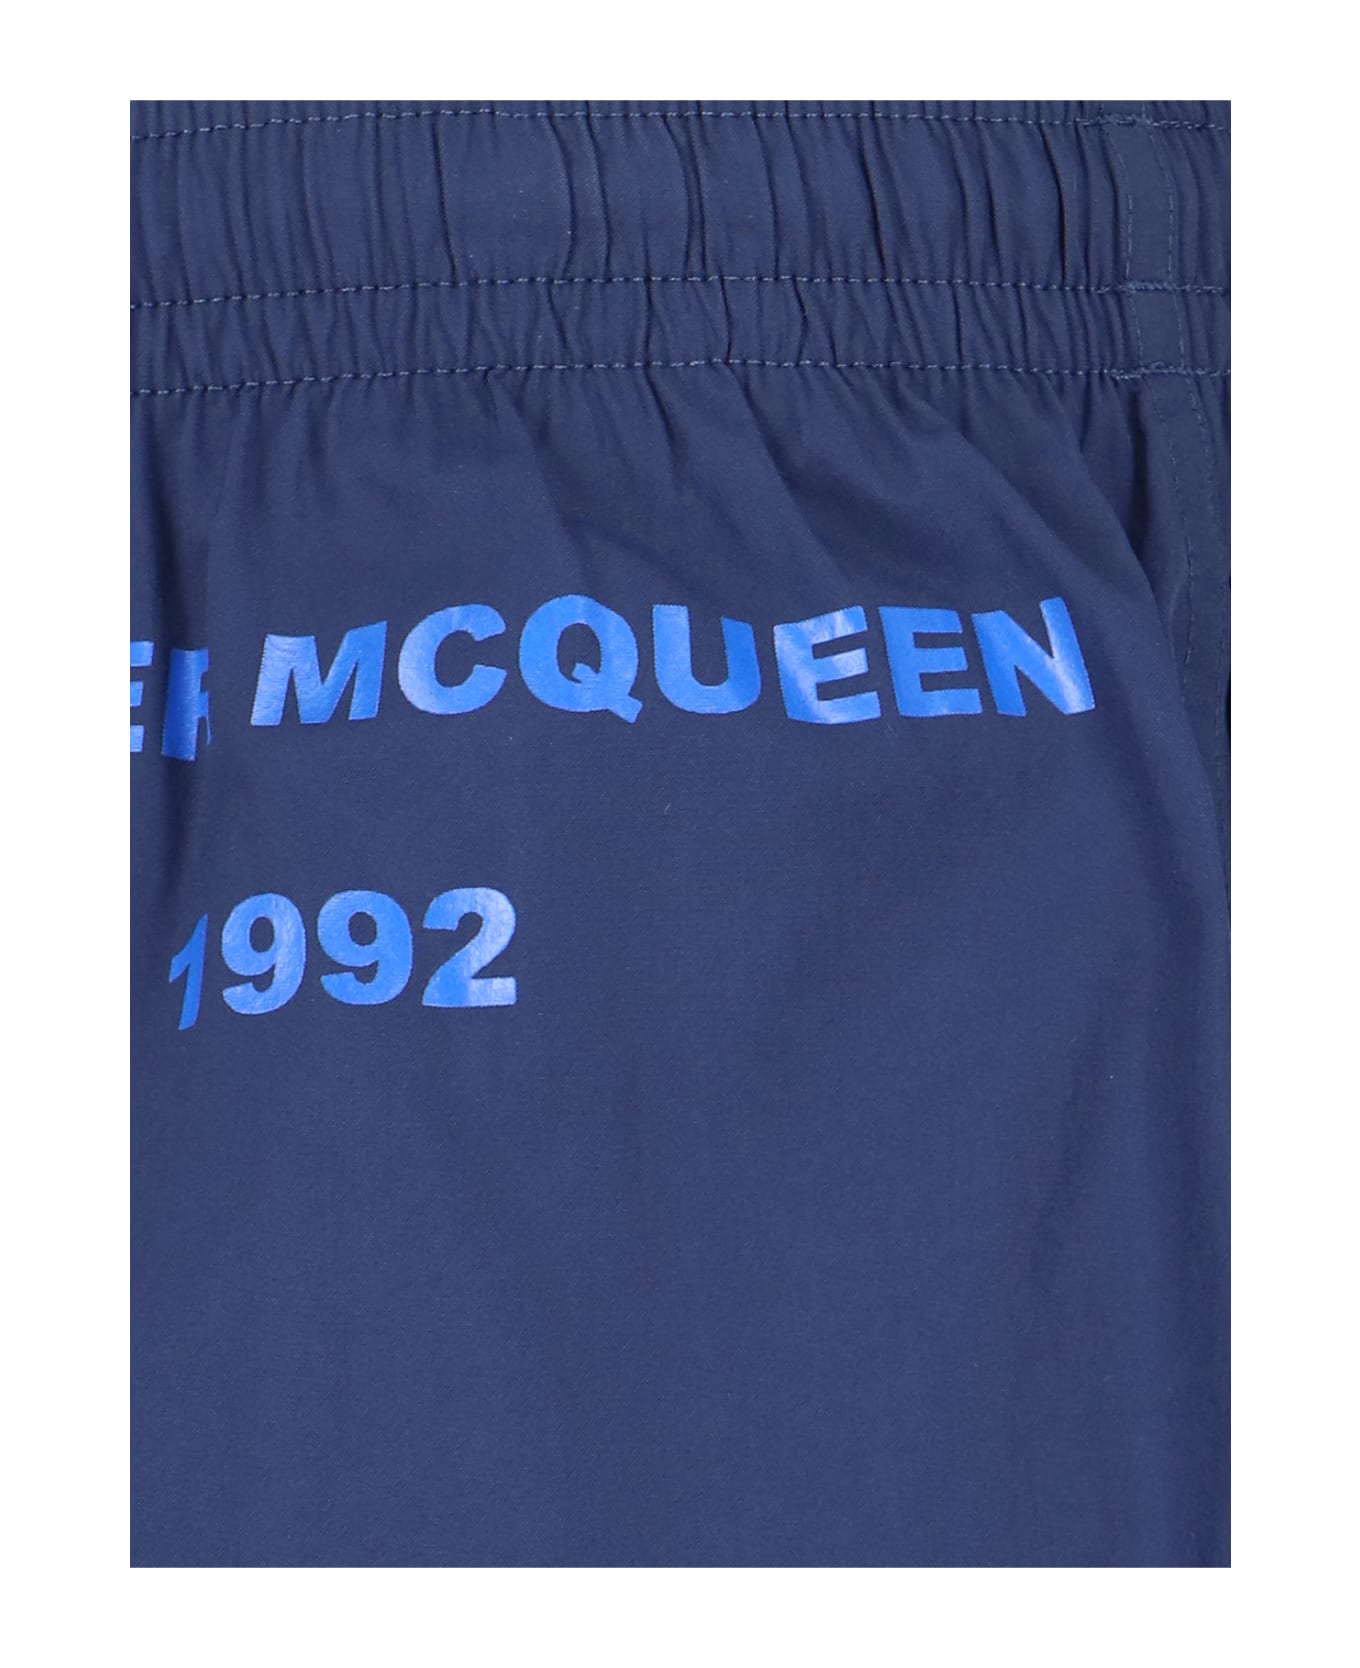 Alexander McQueen Graffiti Logo Swim Shorts - Blue